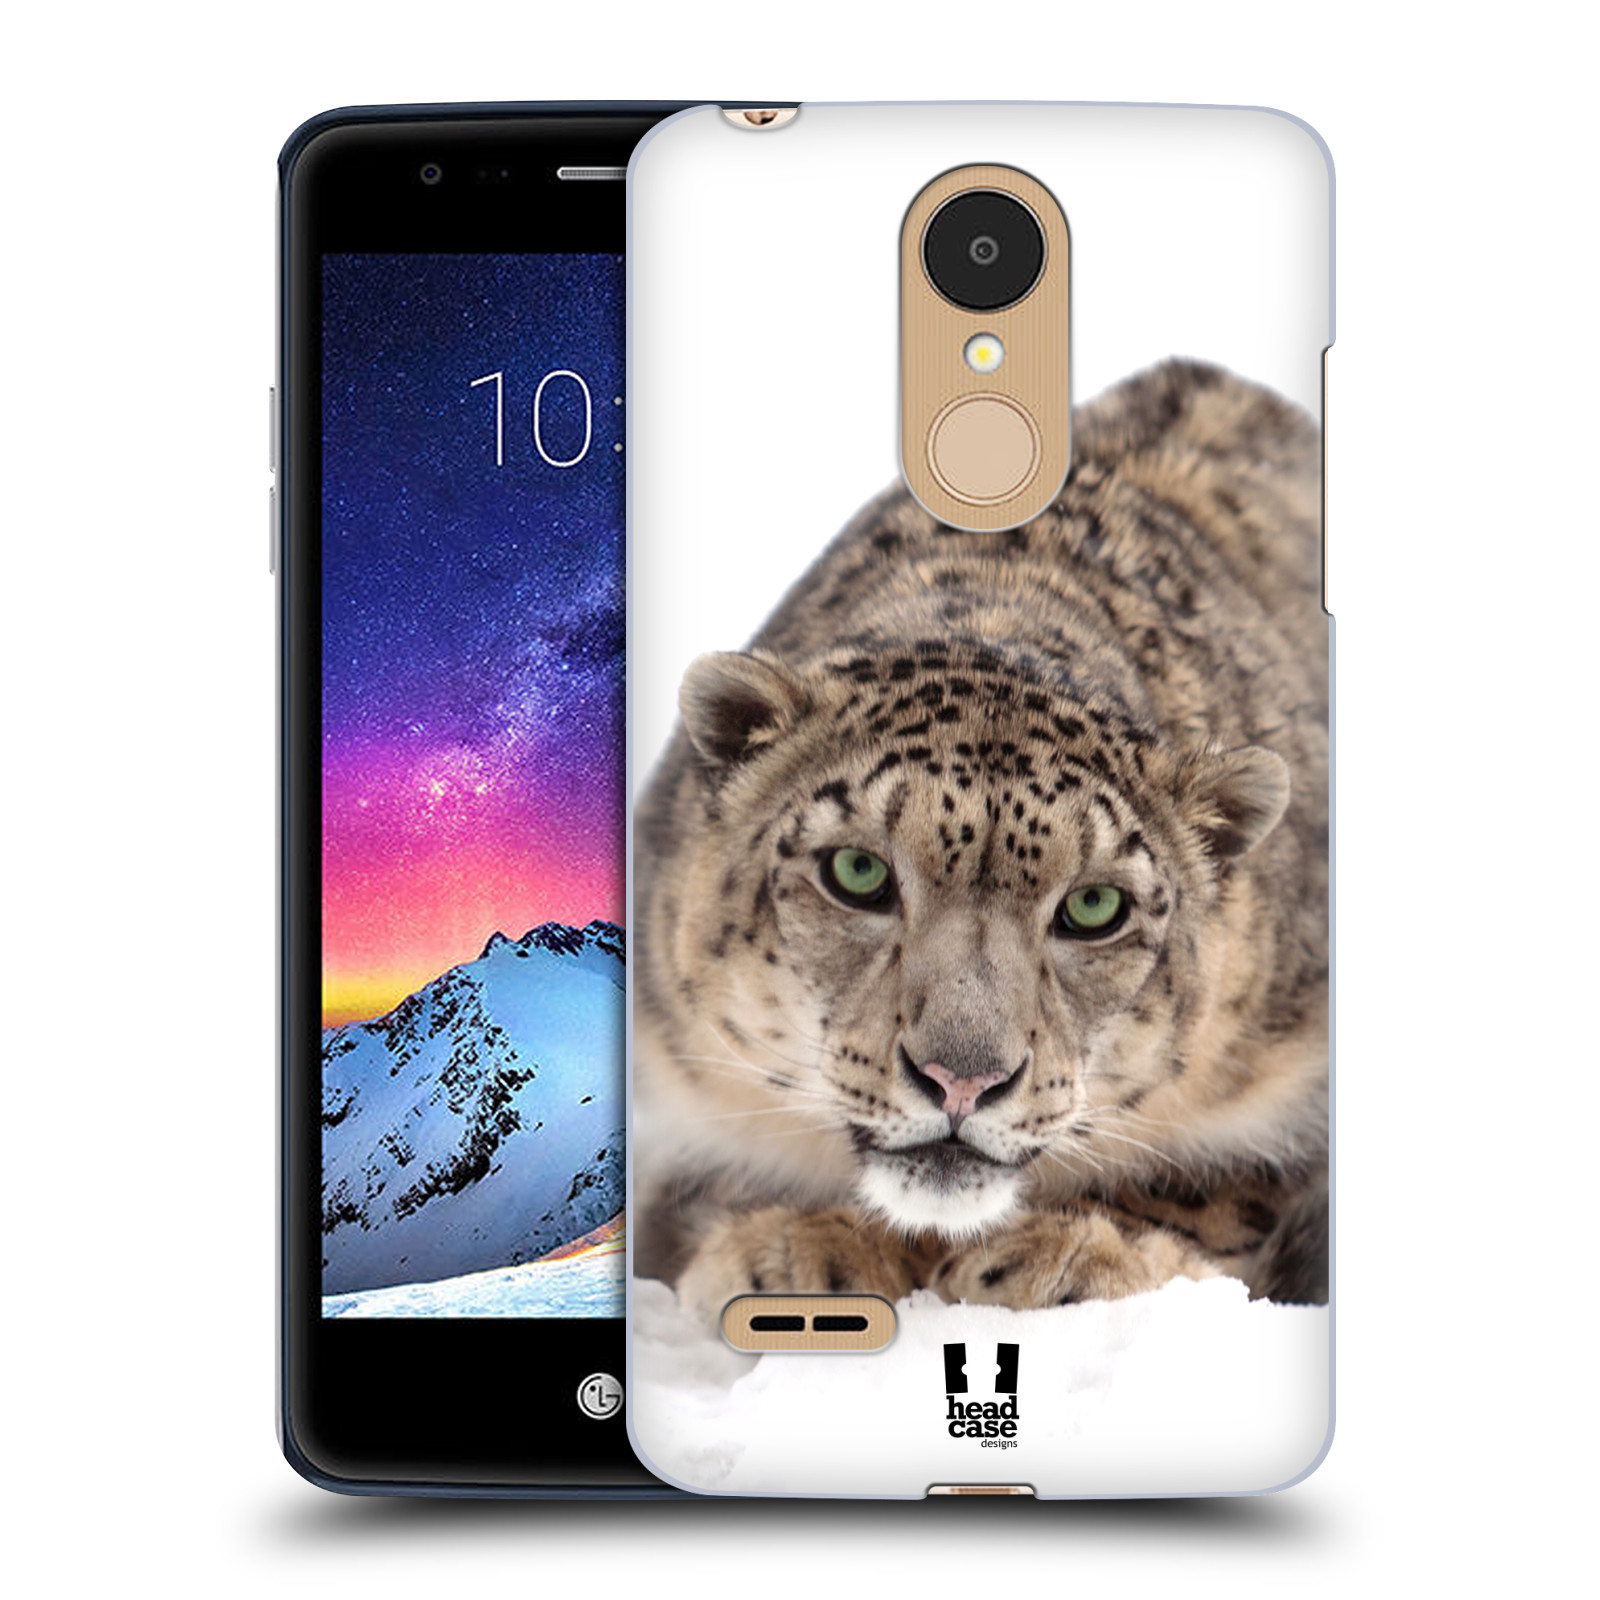 HEAD CASE plastový obal na mobil LG K9 / K8 2018 vzor Divočina, Divoký život a zvířata foto SNĚŽNÝ LEOPARD